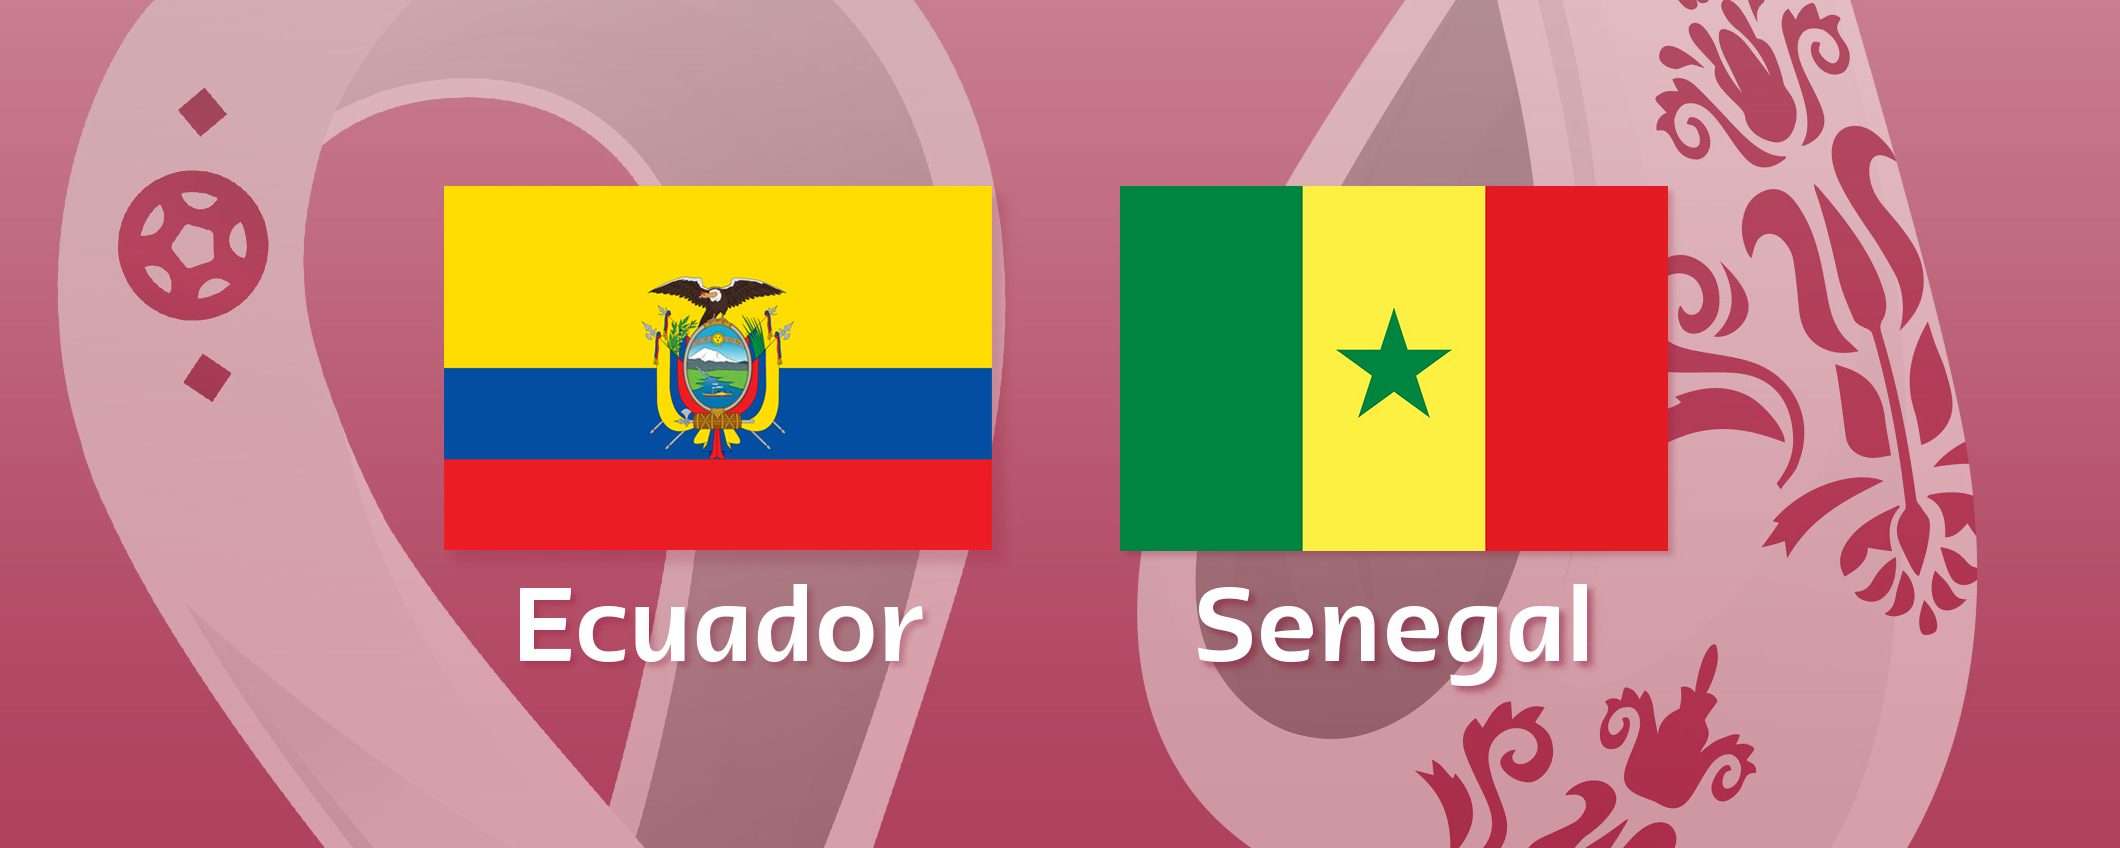 Come vedere Ecuador-Senegal in streaming